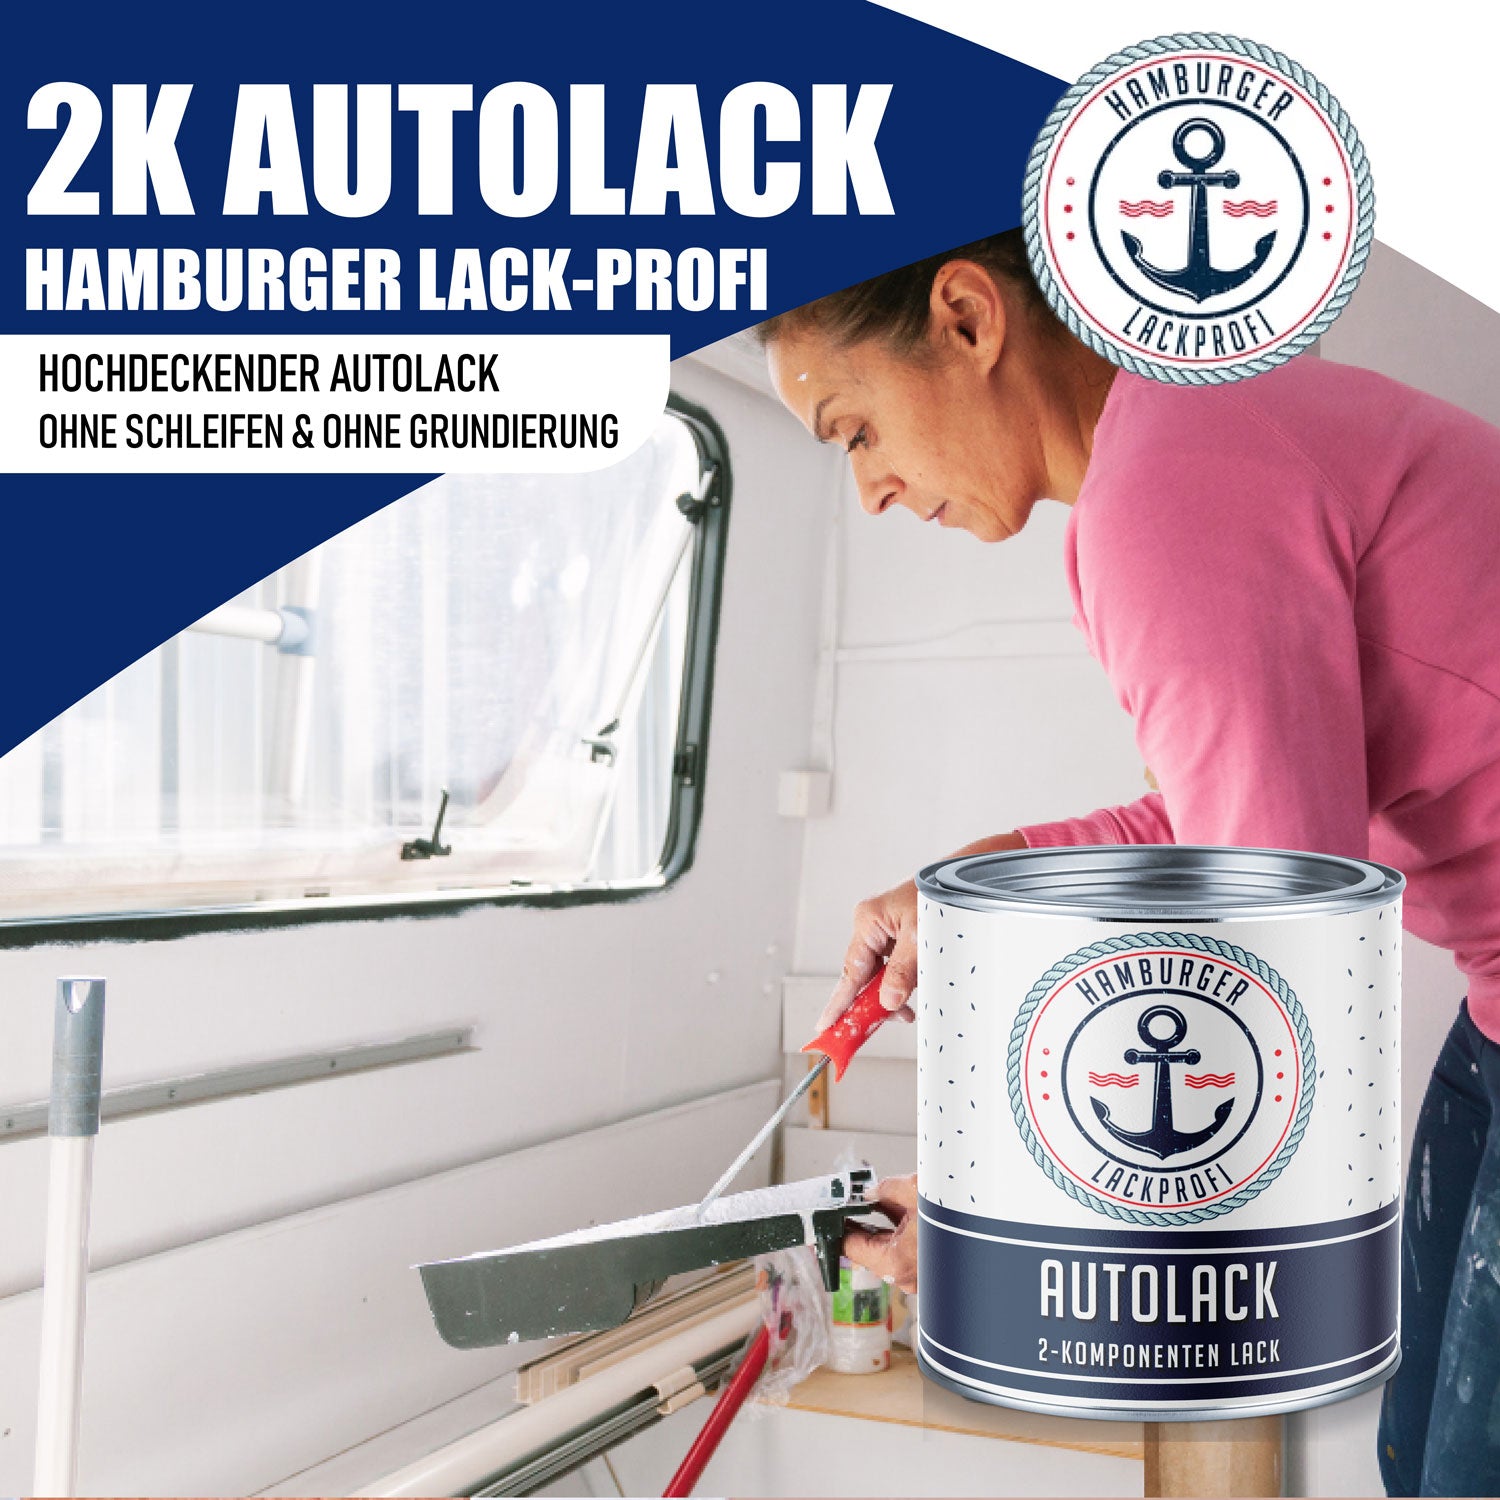 Hamburger Lack-Profi 2K Autolack in Melonengelb RAL 1028 mit Lackierset (X300) & Verdünnung (1 L) - 30% Sparangebot